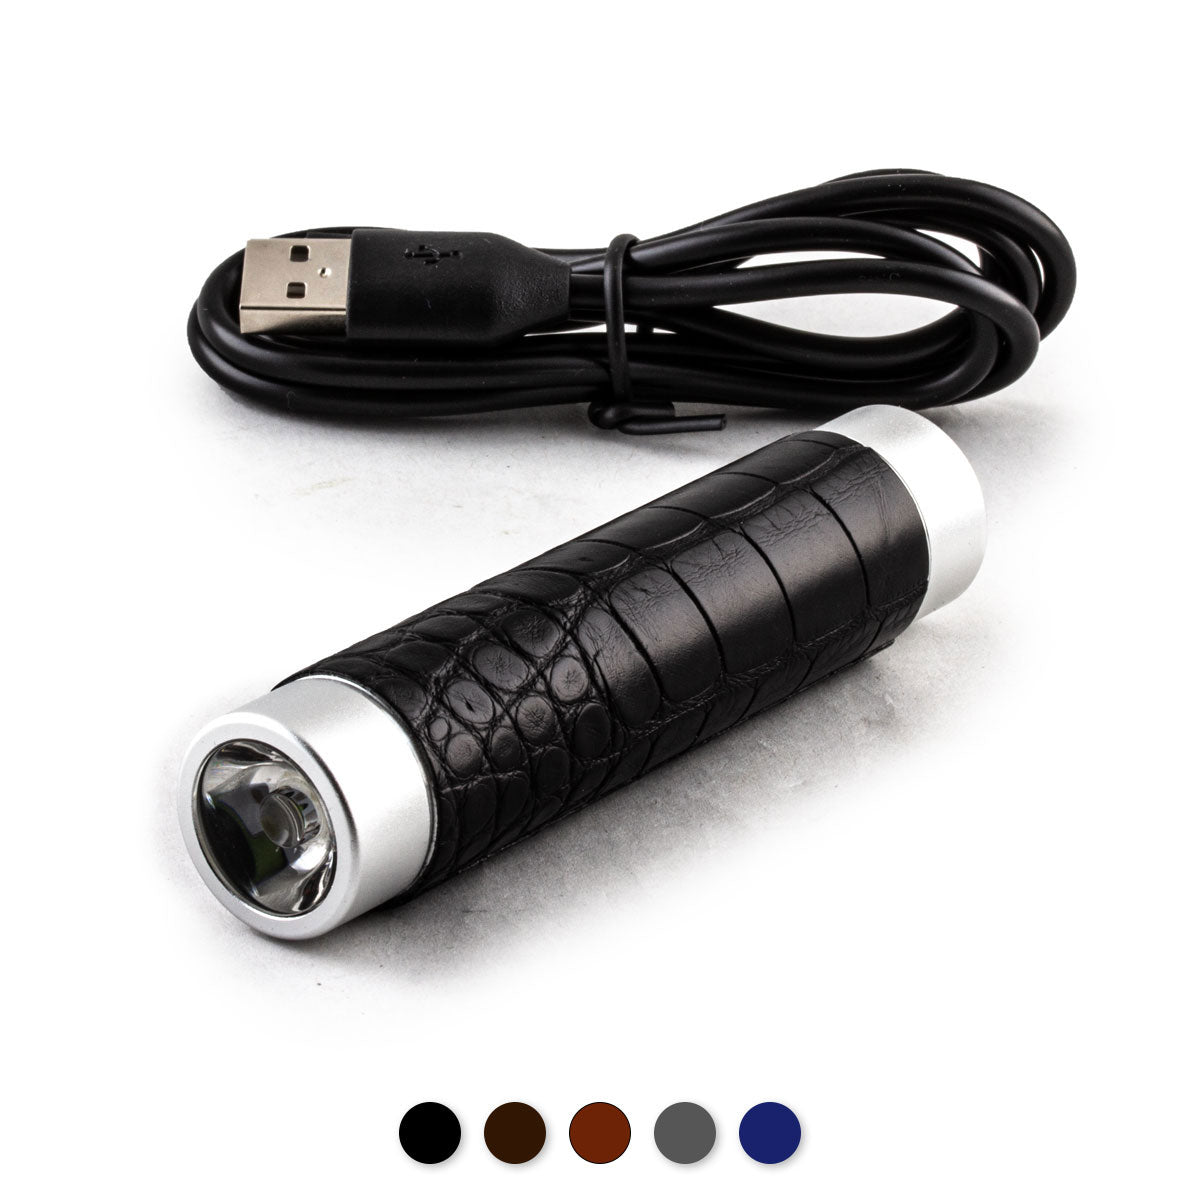 Mini external battery & flashlights - Alligator - Universal charger iPhone, Samsung, smartphone, tablet ... (black, brown, gray)